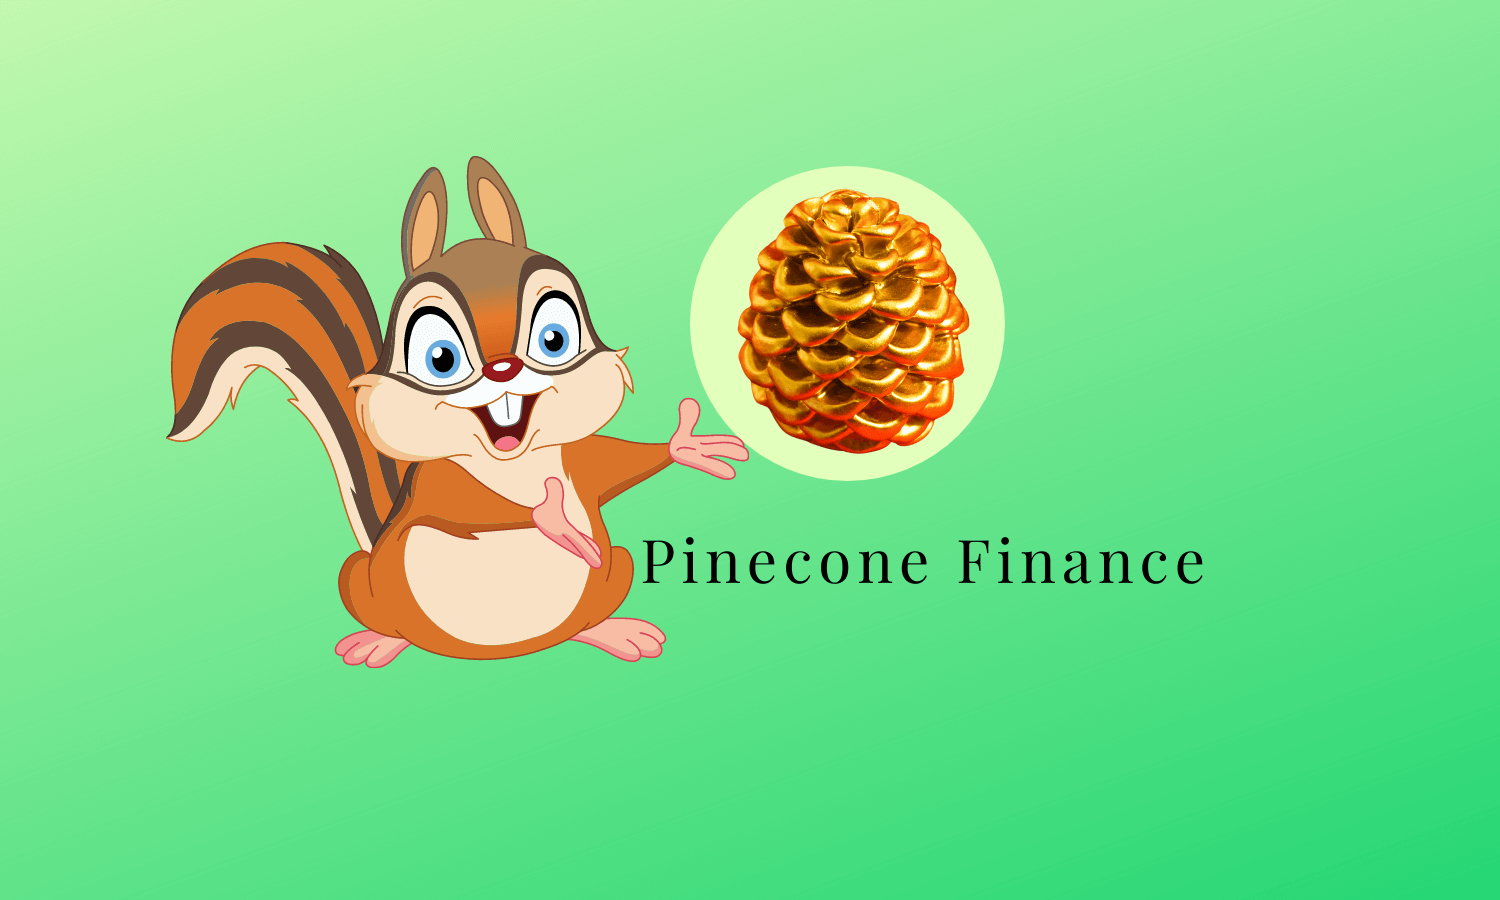 Pinecone Finance